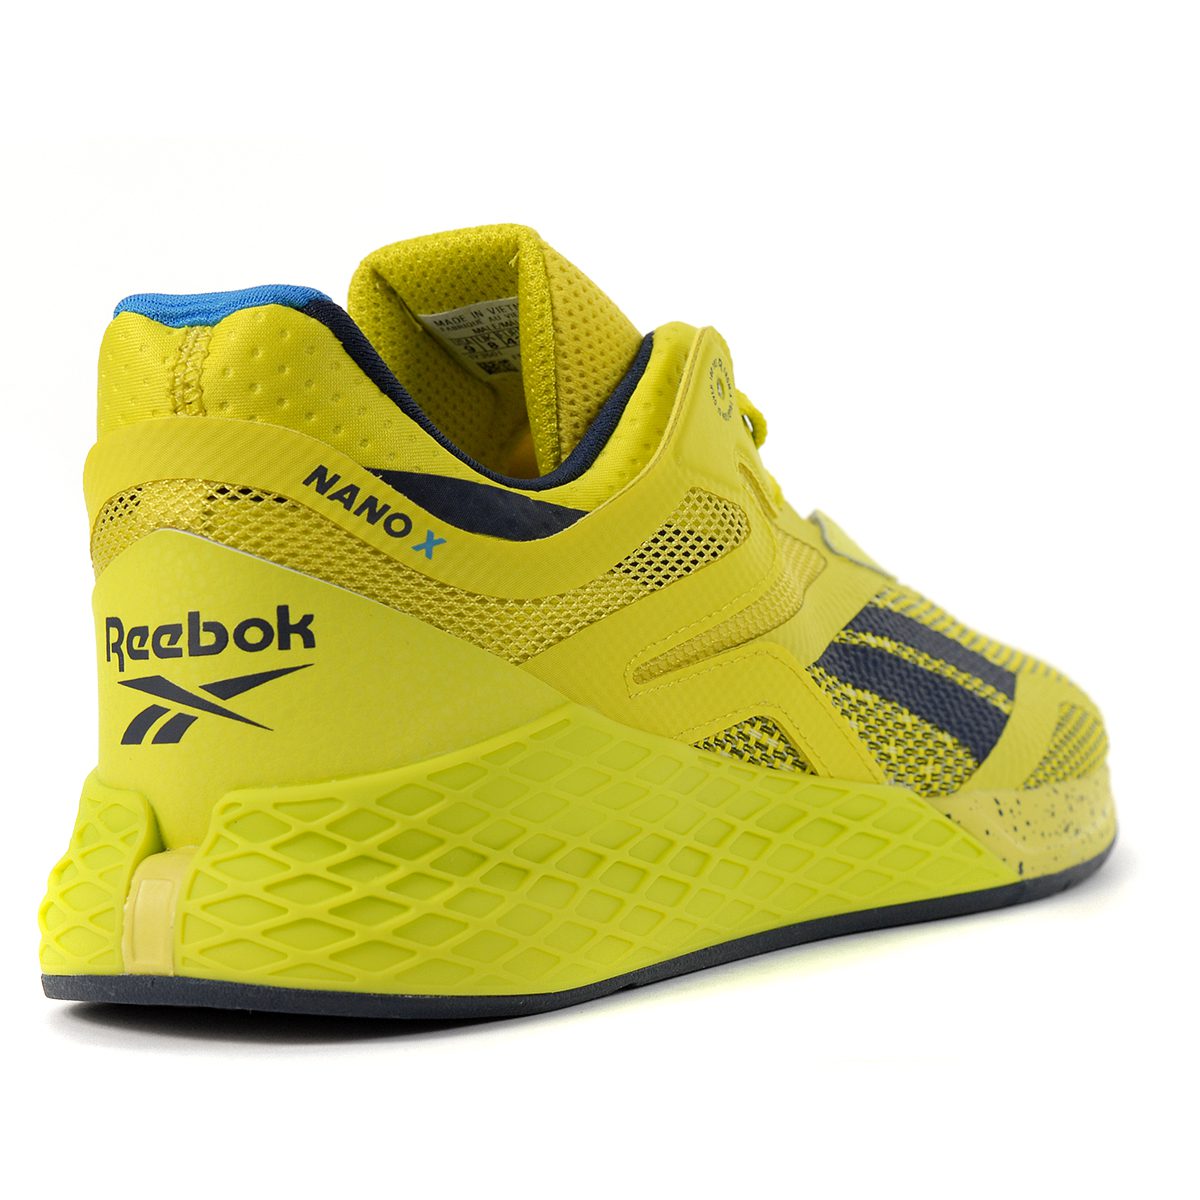 Reebok Men's Nano X Chartreuse/Vector Navy/Yellow Workout Running Shoes FW8128 